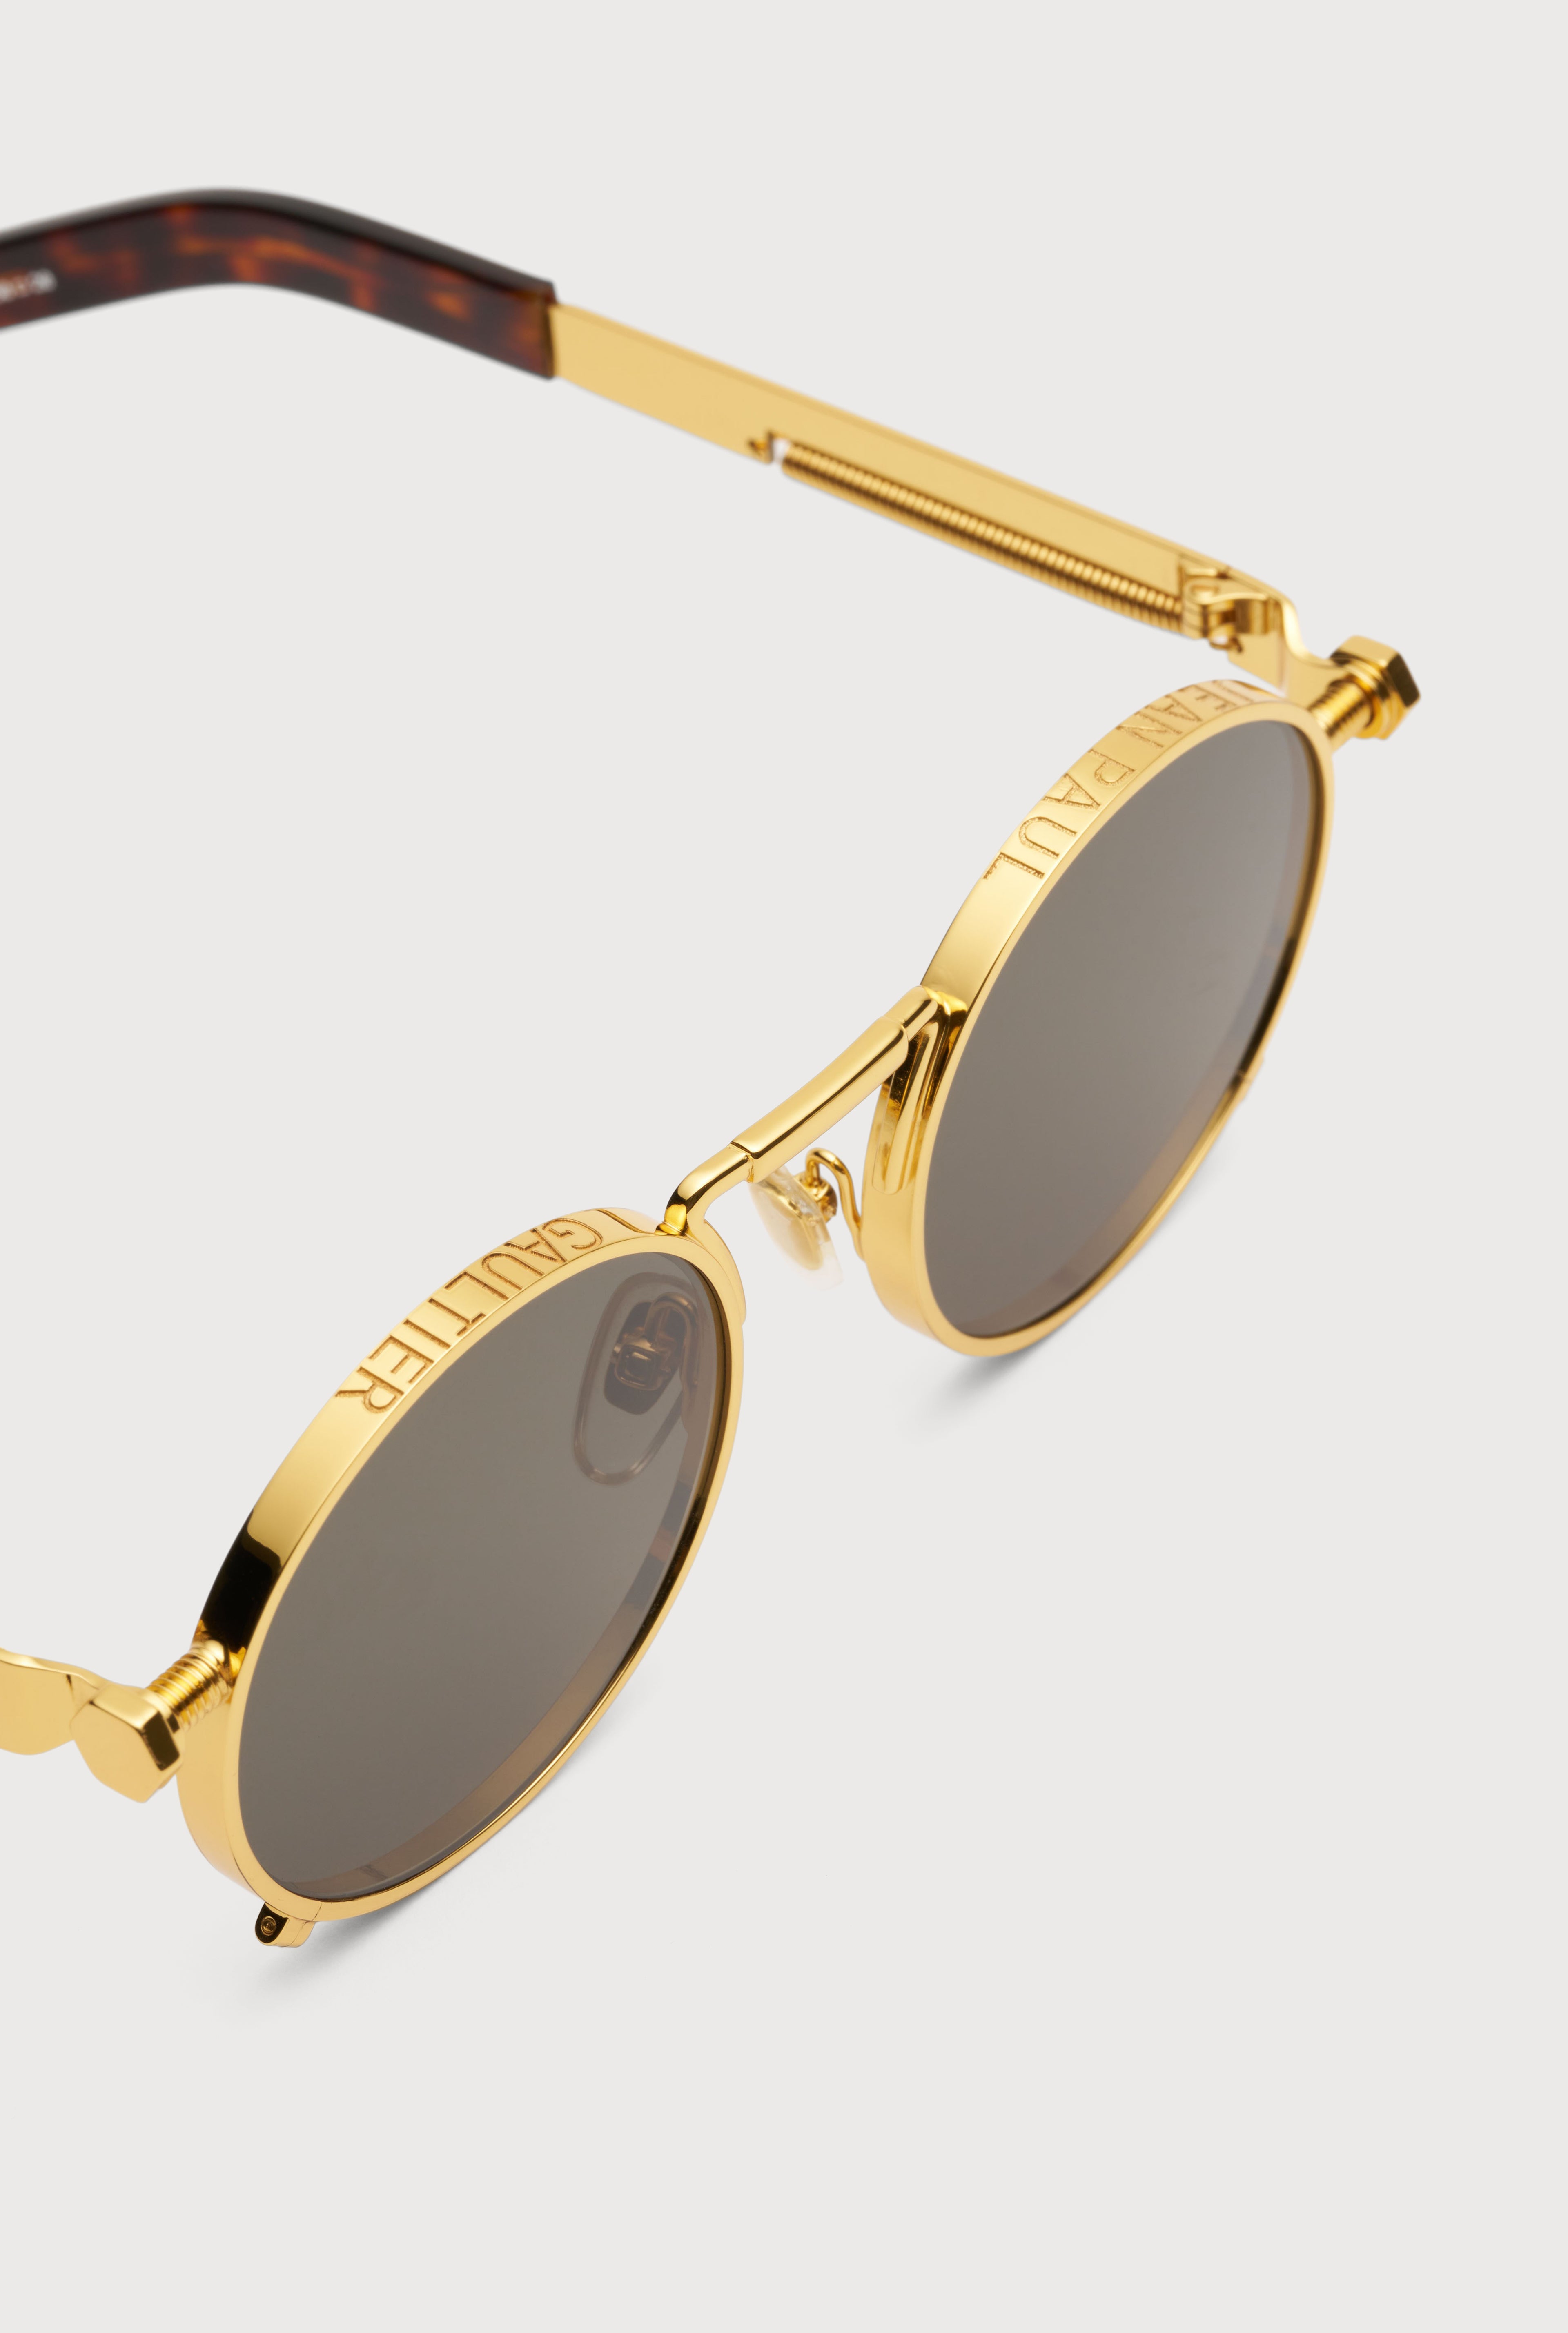 The Gold 56-8171 Sunglasses